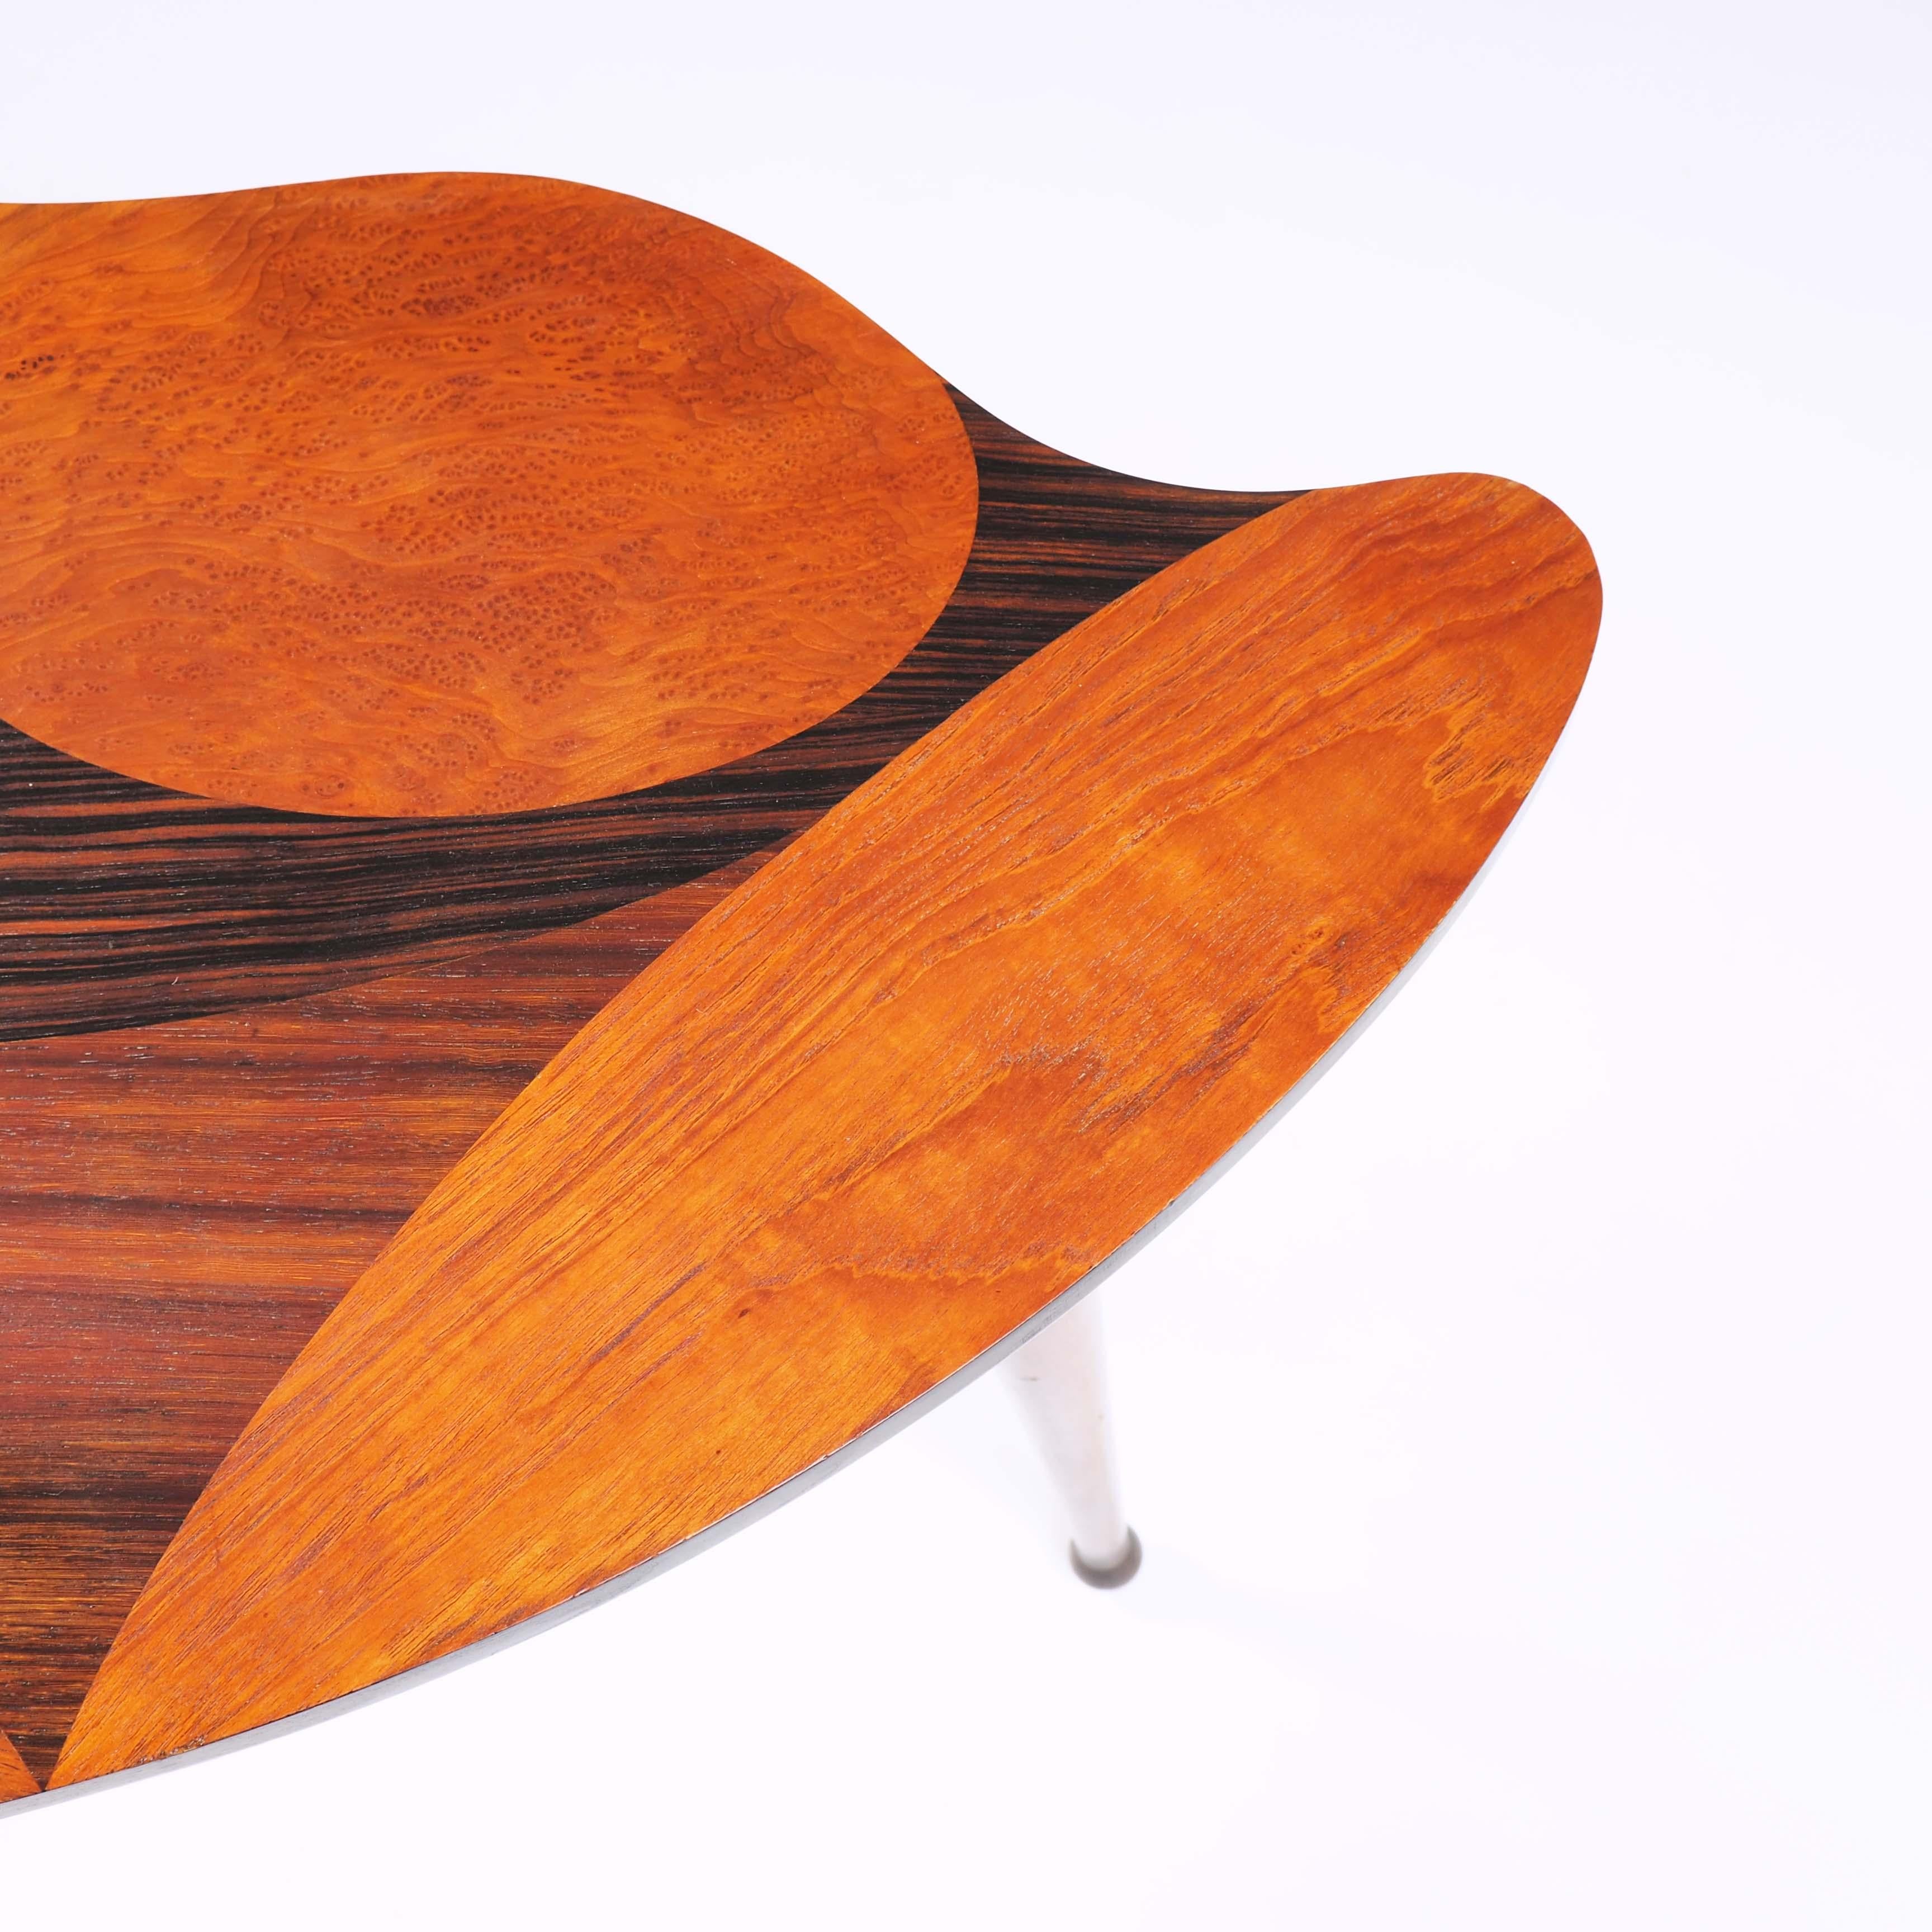 Teak Organic Shaped Swedish Side Table with Inlaid Wood